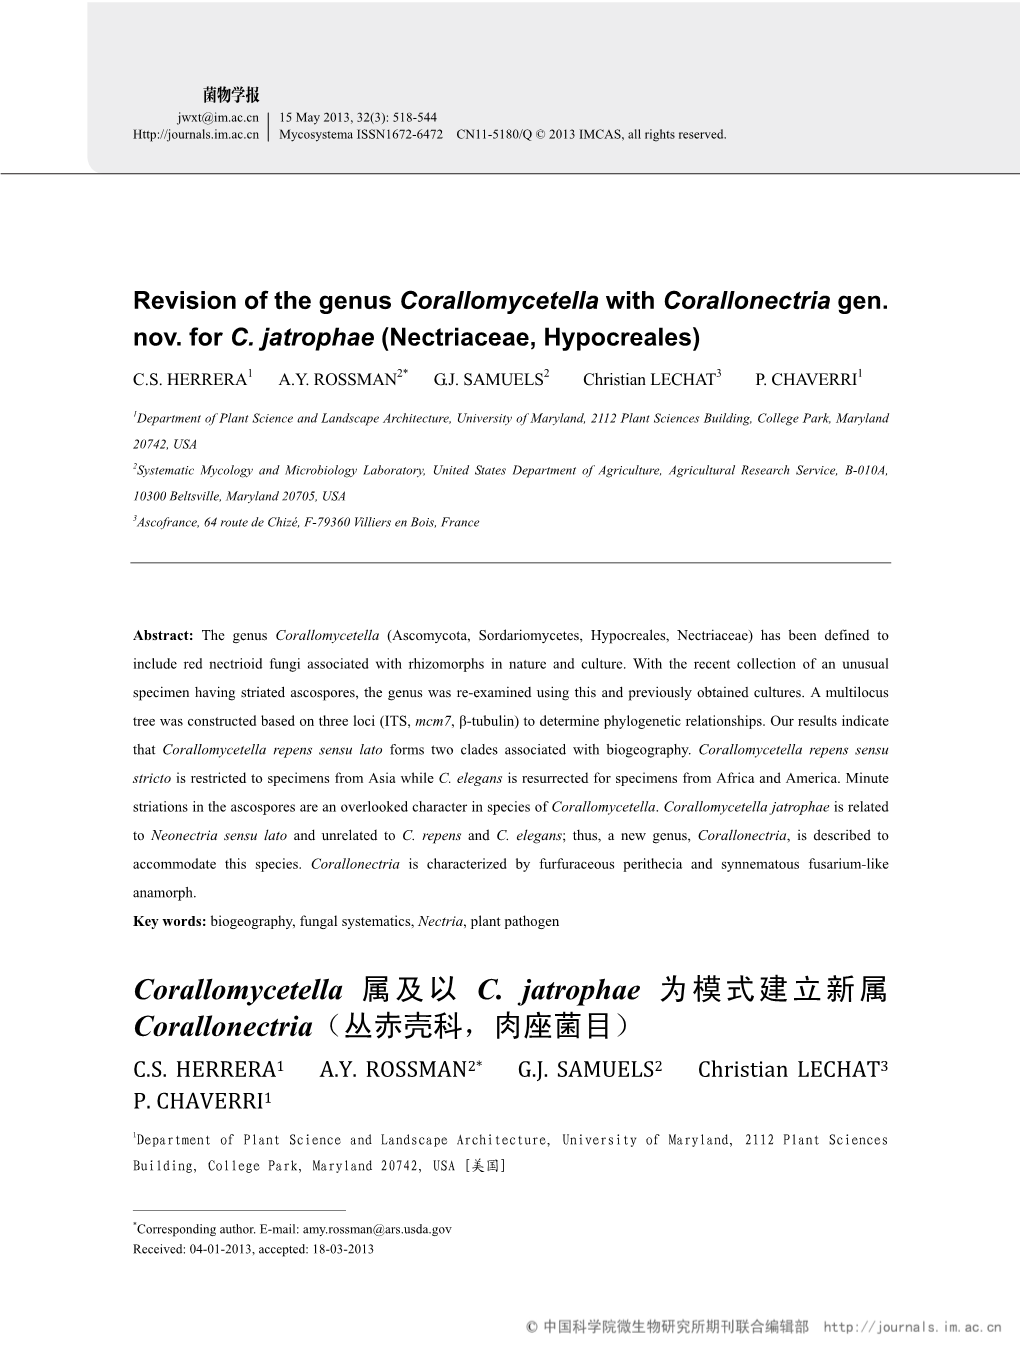 Corallomycetella 属及以 C. Jatrophae 为模式建立新属 Corallonectria（丛赤壳科，肉座菌目） C.S